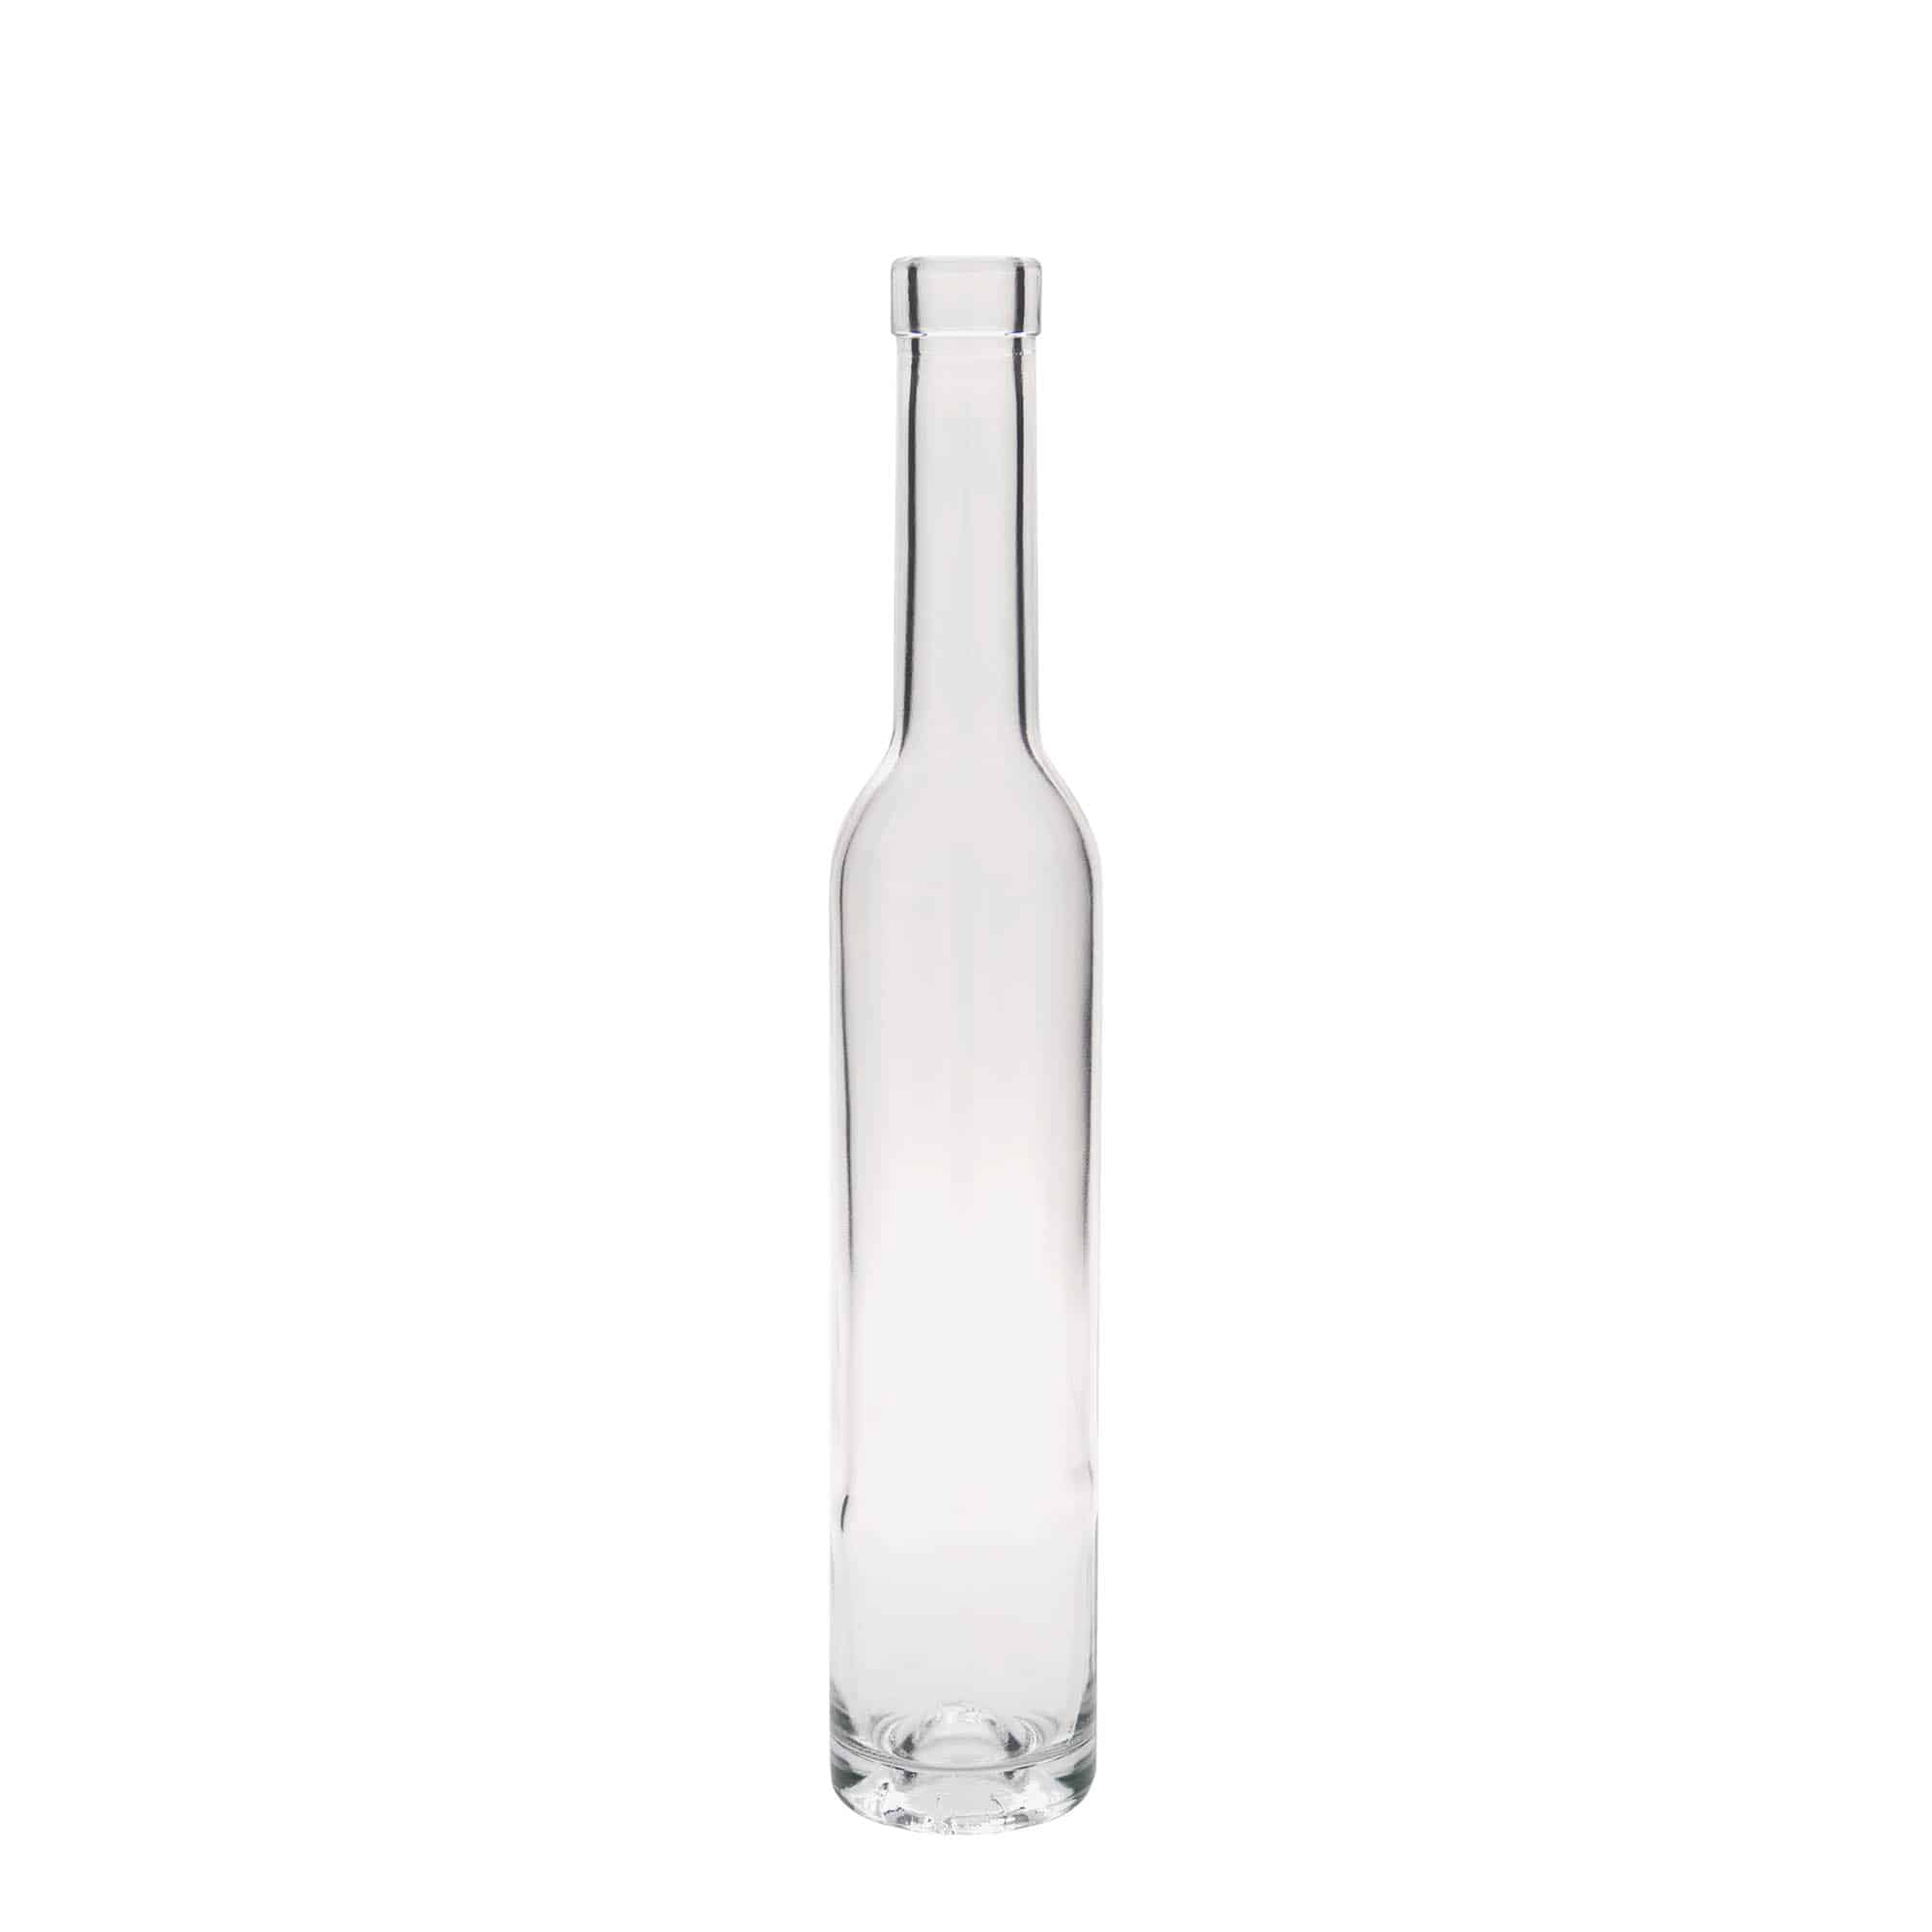 250 ml glass bottle 'Maximo', closure: cork